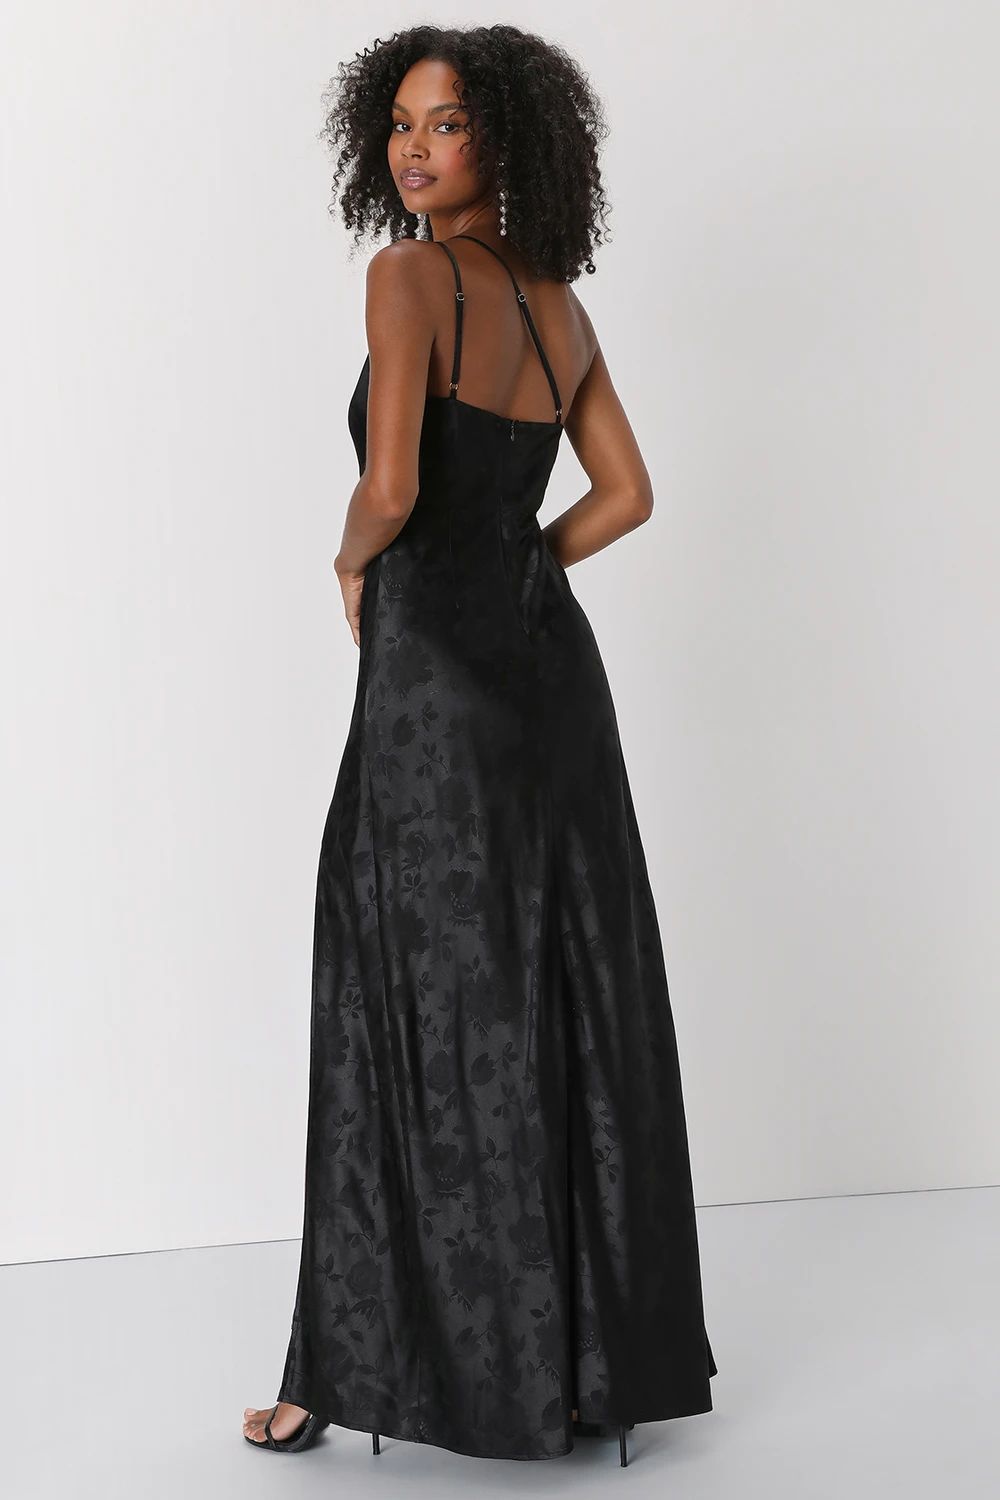 Regal and Refined Black Satin Jacquard One-Shoulder Dress | Lulus (US)